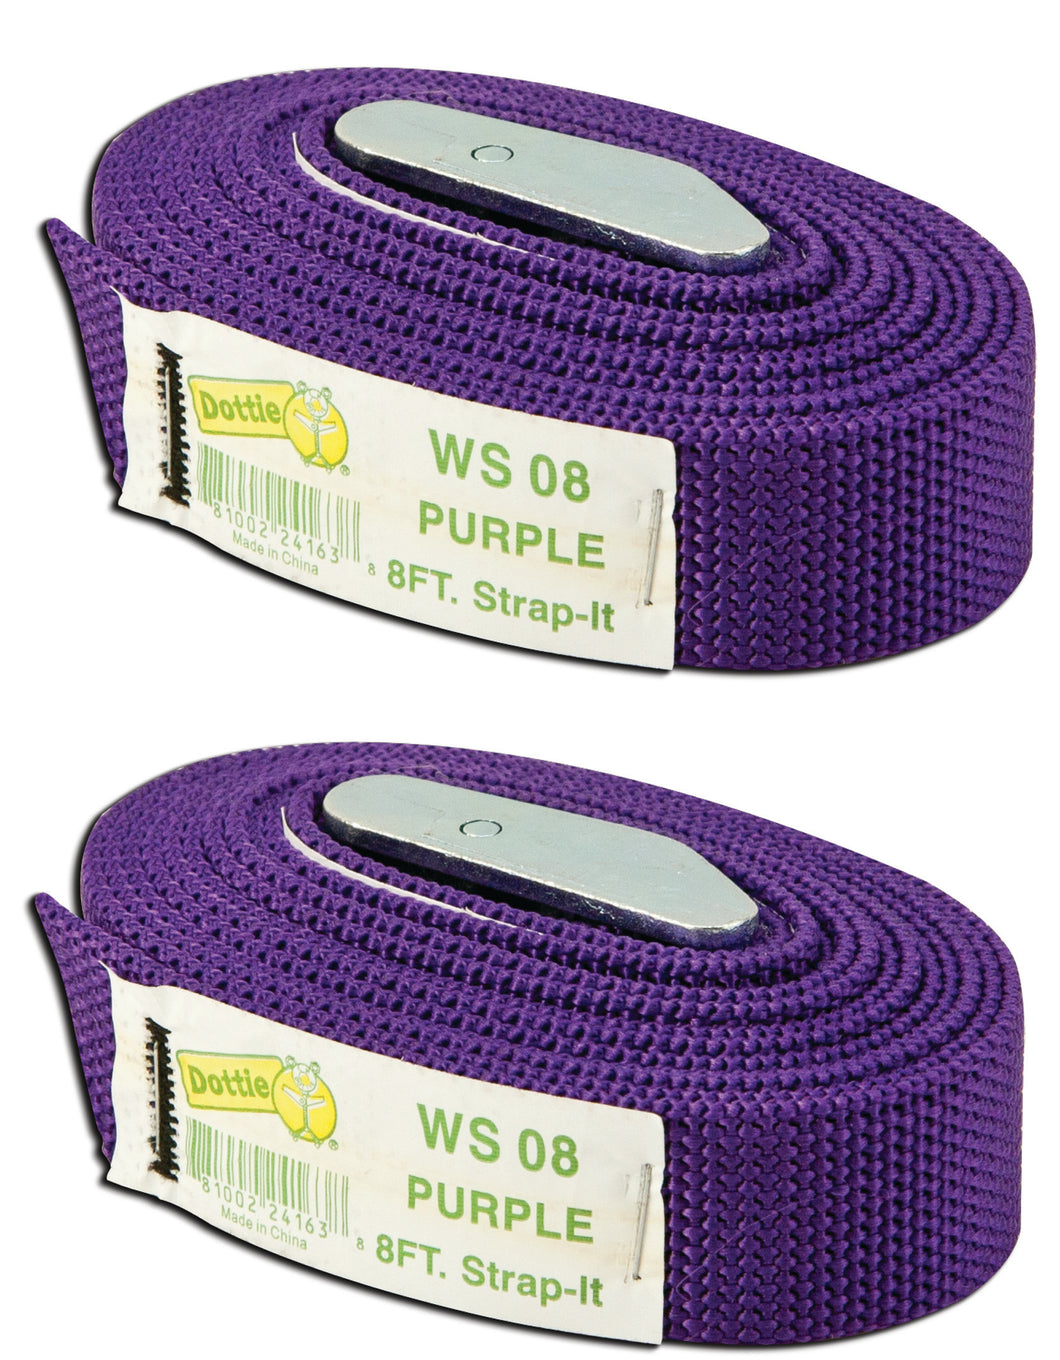 Dottie 2WS08 8' Web Straps w/ Buckle, Nylonr - Purple, 2 Included Dottie 2WS08